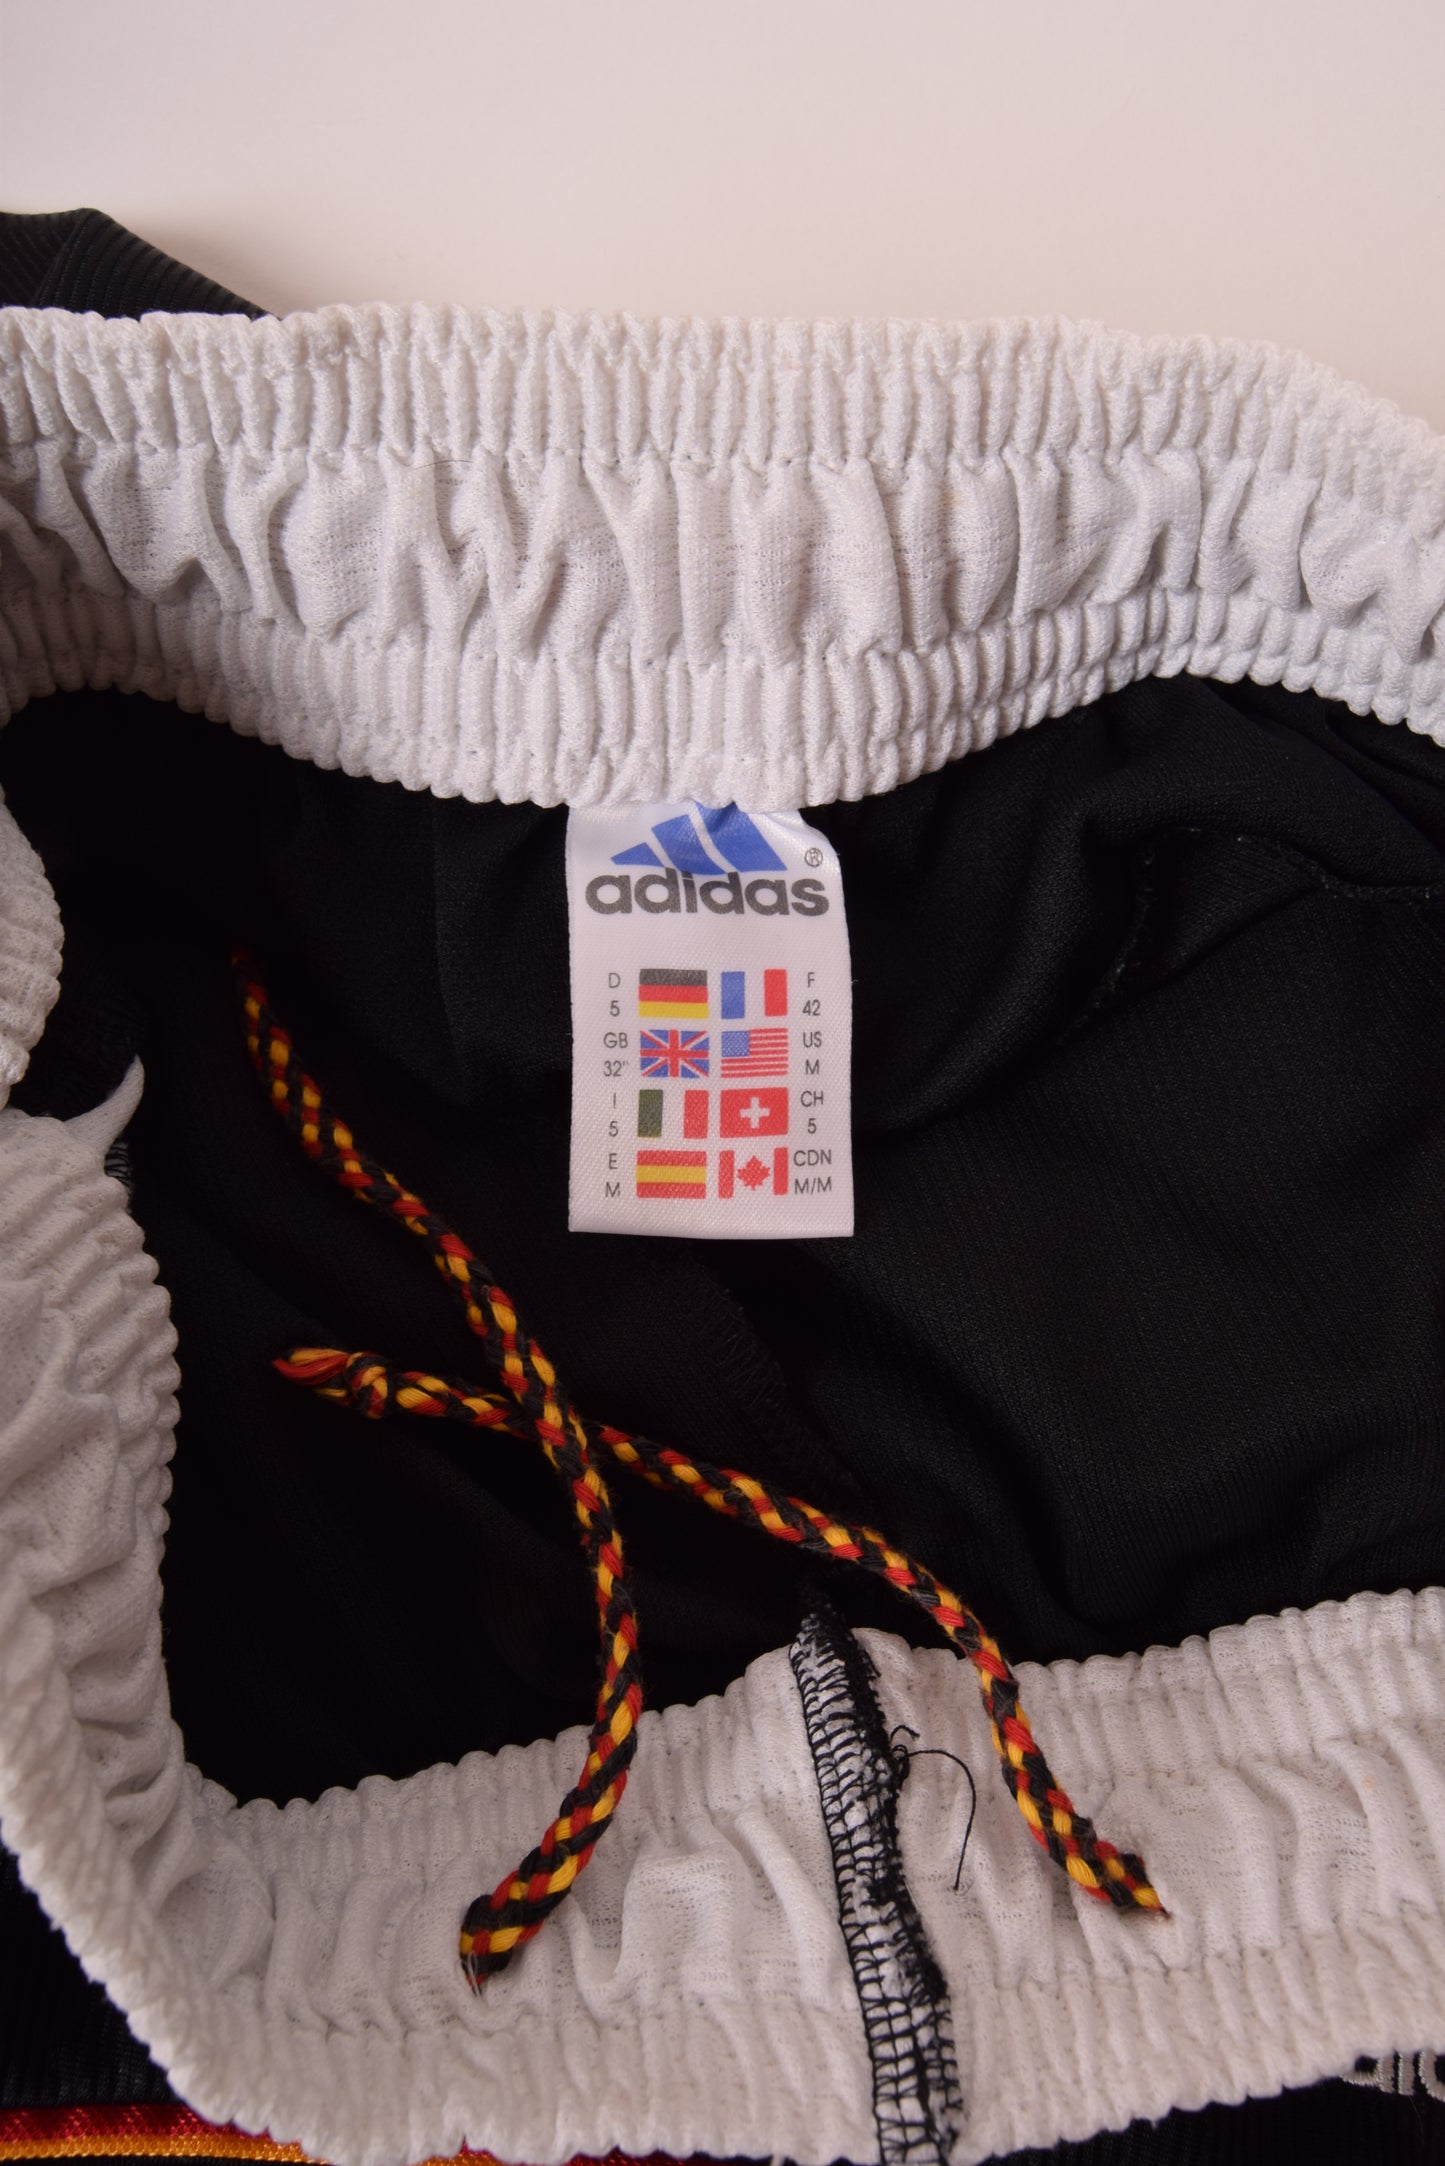 Vintage Germany Deutschland Adidas 1998-1999 Home Football Shorts Black Size M